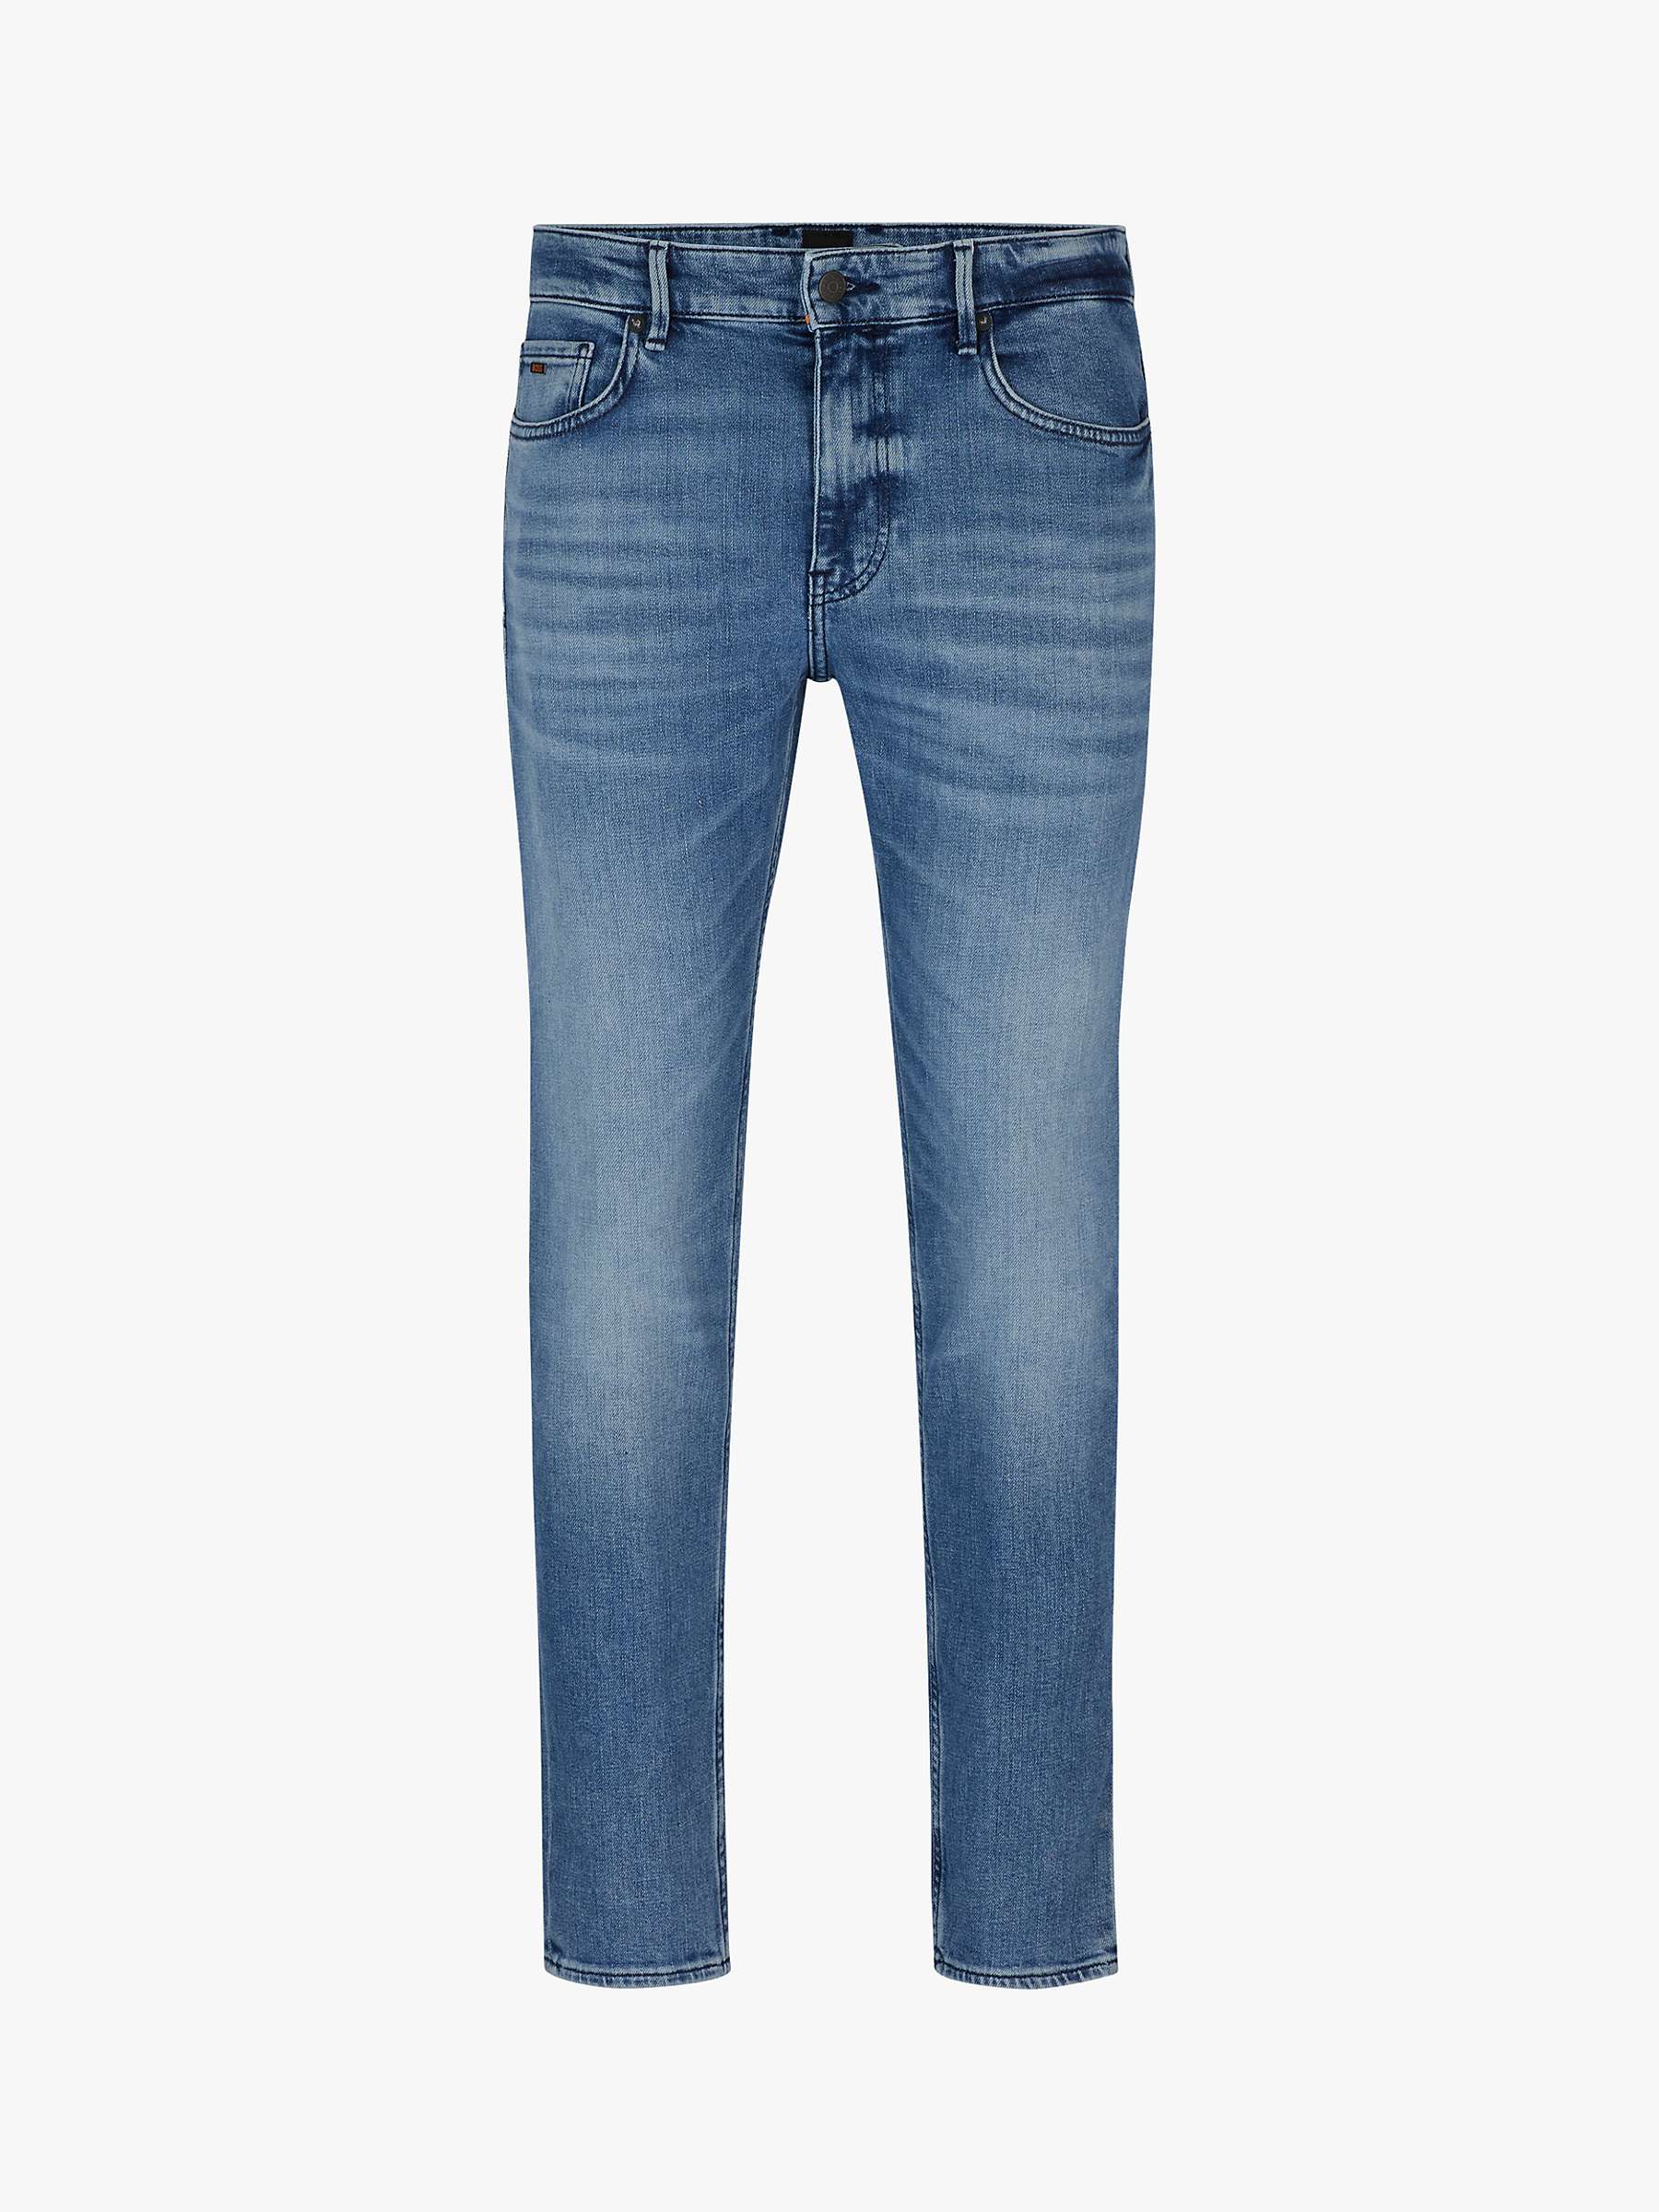 Buy BOSS Delano Slim Fit Jeans, Blue Online at johnlewis.com